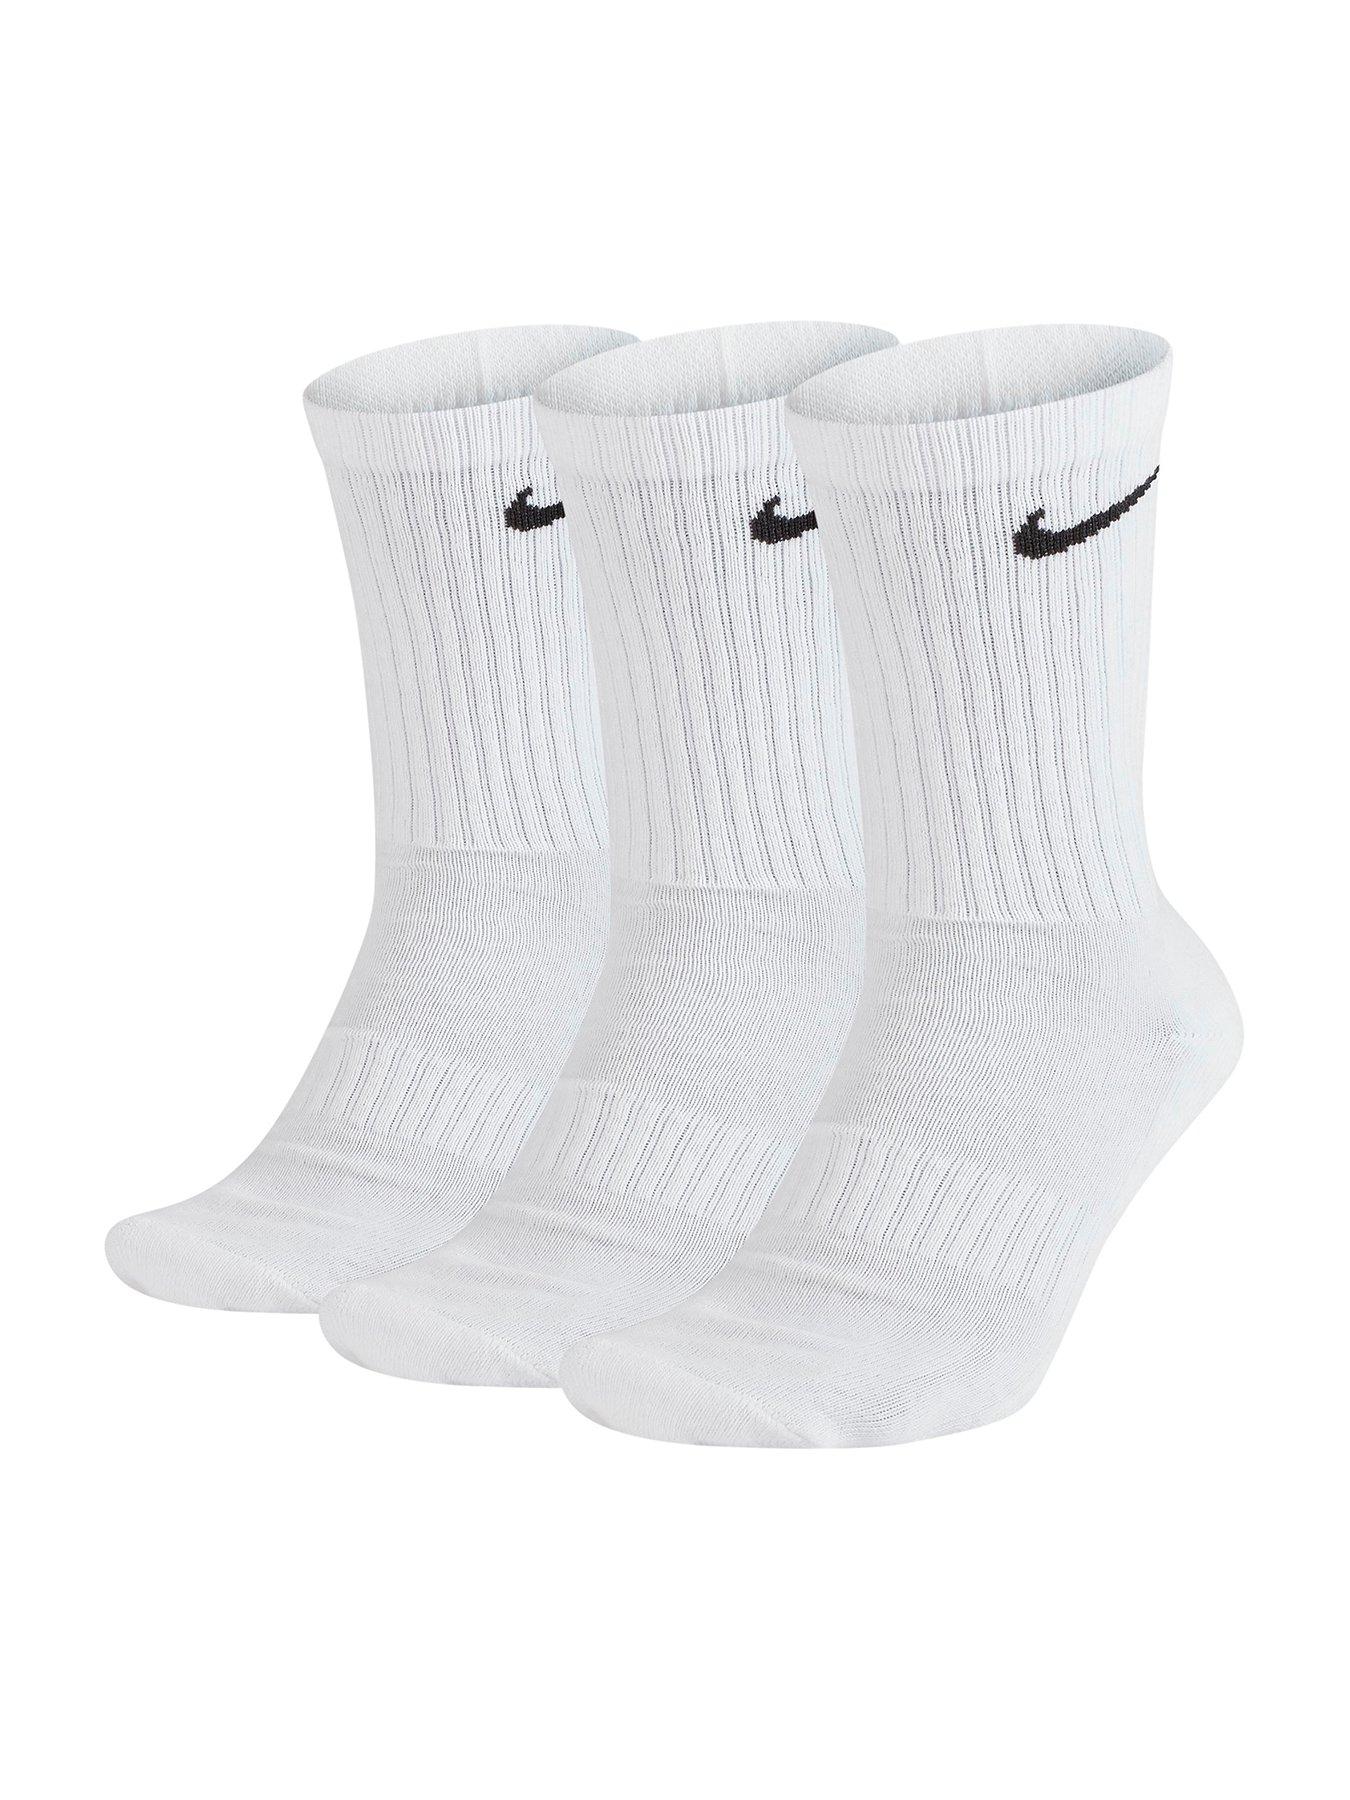 Nike Everyday Cushion Crew Socks (3 